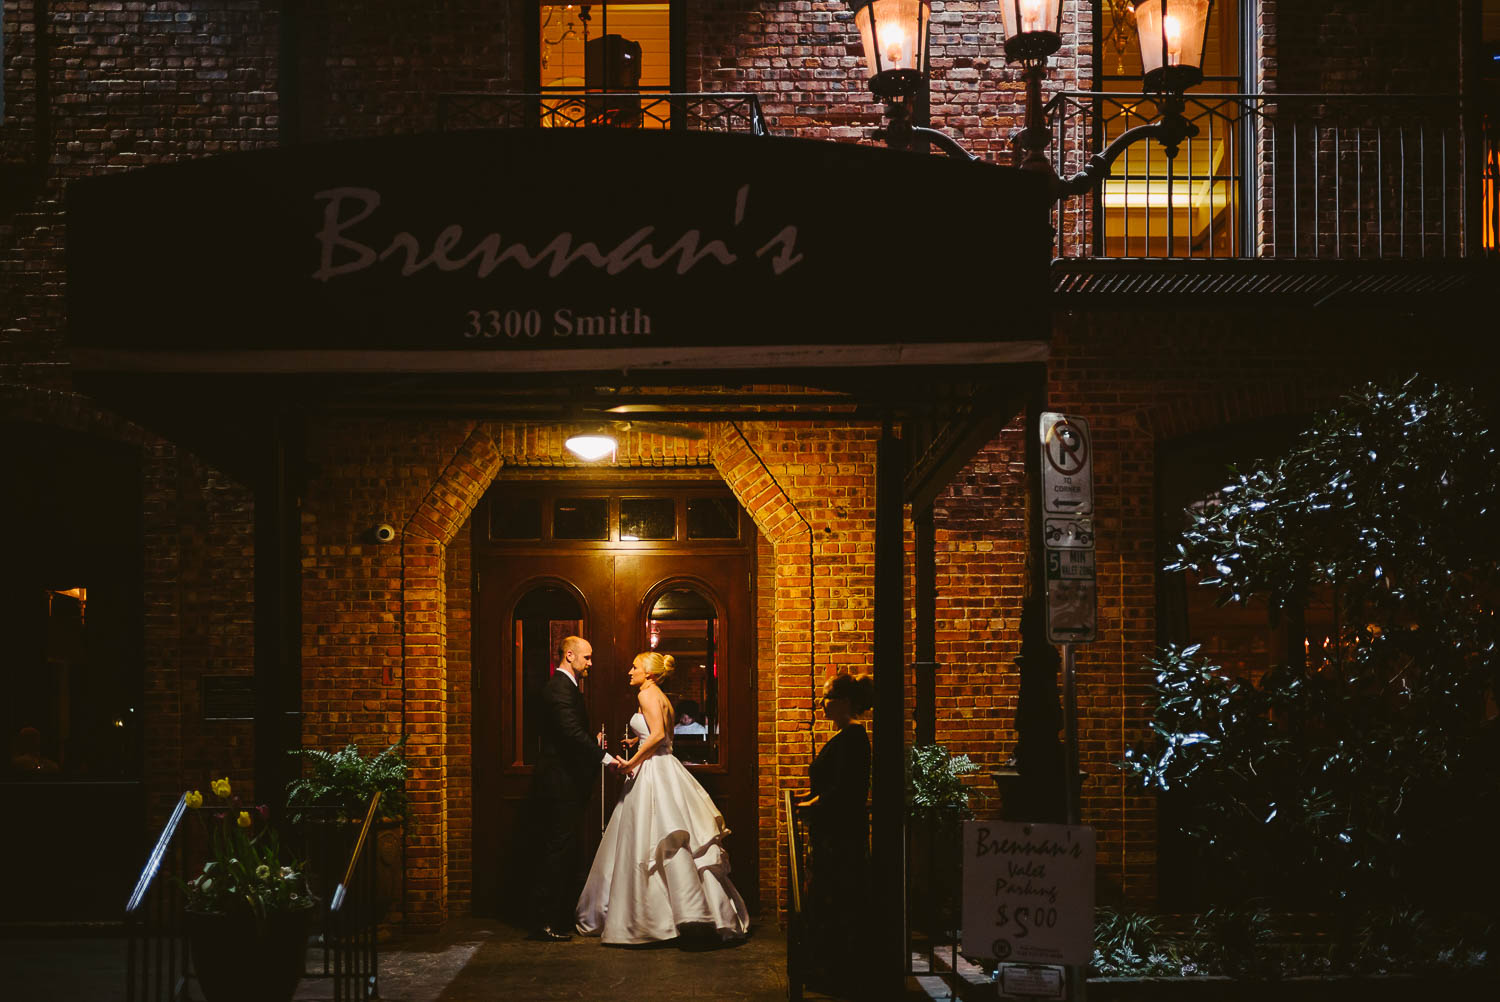 Couple arrive ready to walk through the entrance wedding reception Brennan's of Houston, Texas.